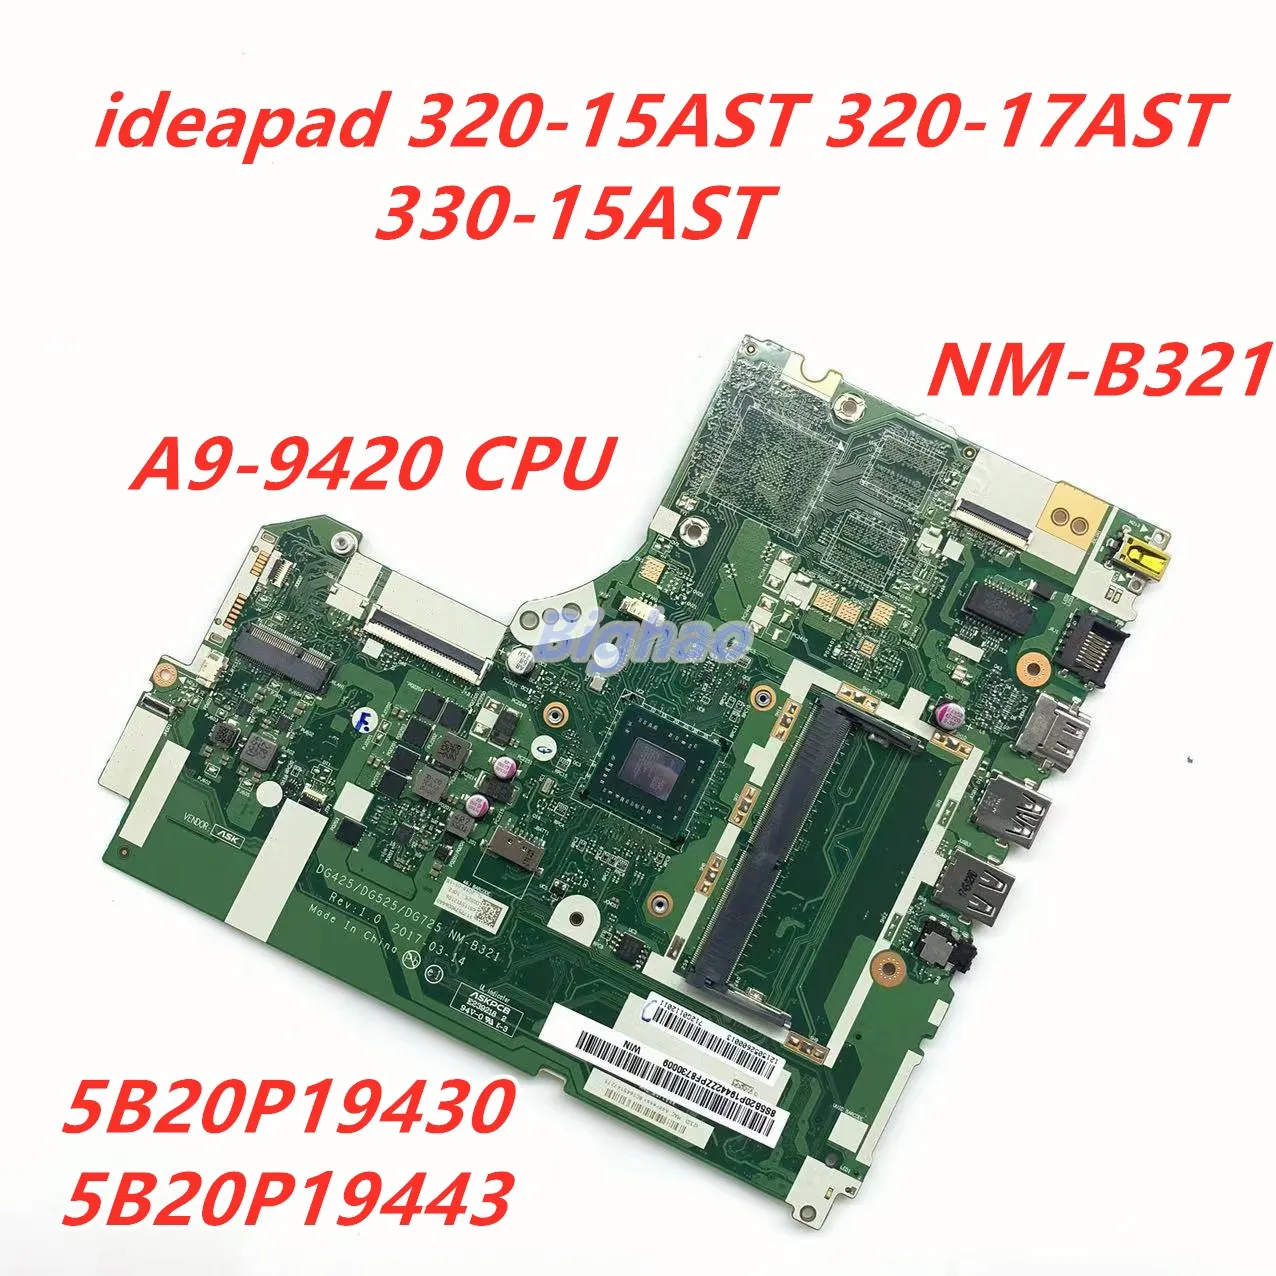 

For Lenovo ideapad 320-15AST 320-17AST 330-15AST Mainboard 5B20P19430 5B20P19443 NM-B321 AMD A9-9420 CPU DDR4 Laptop motherboard